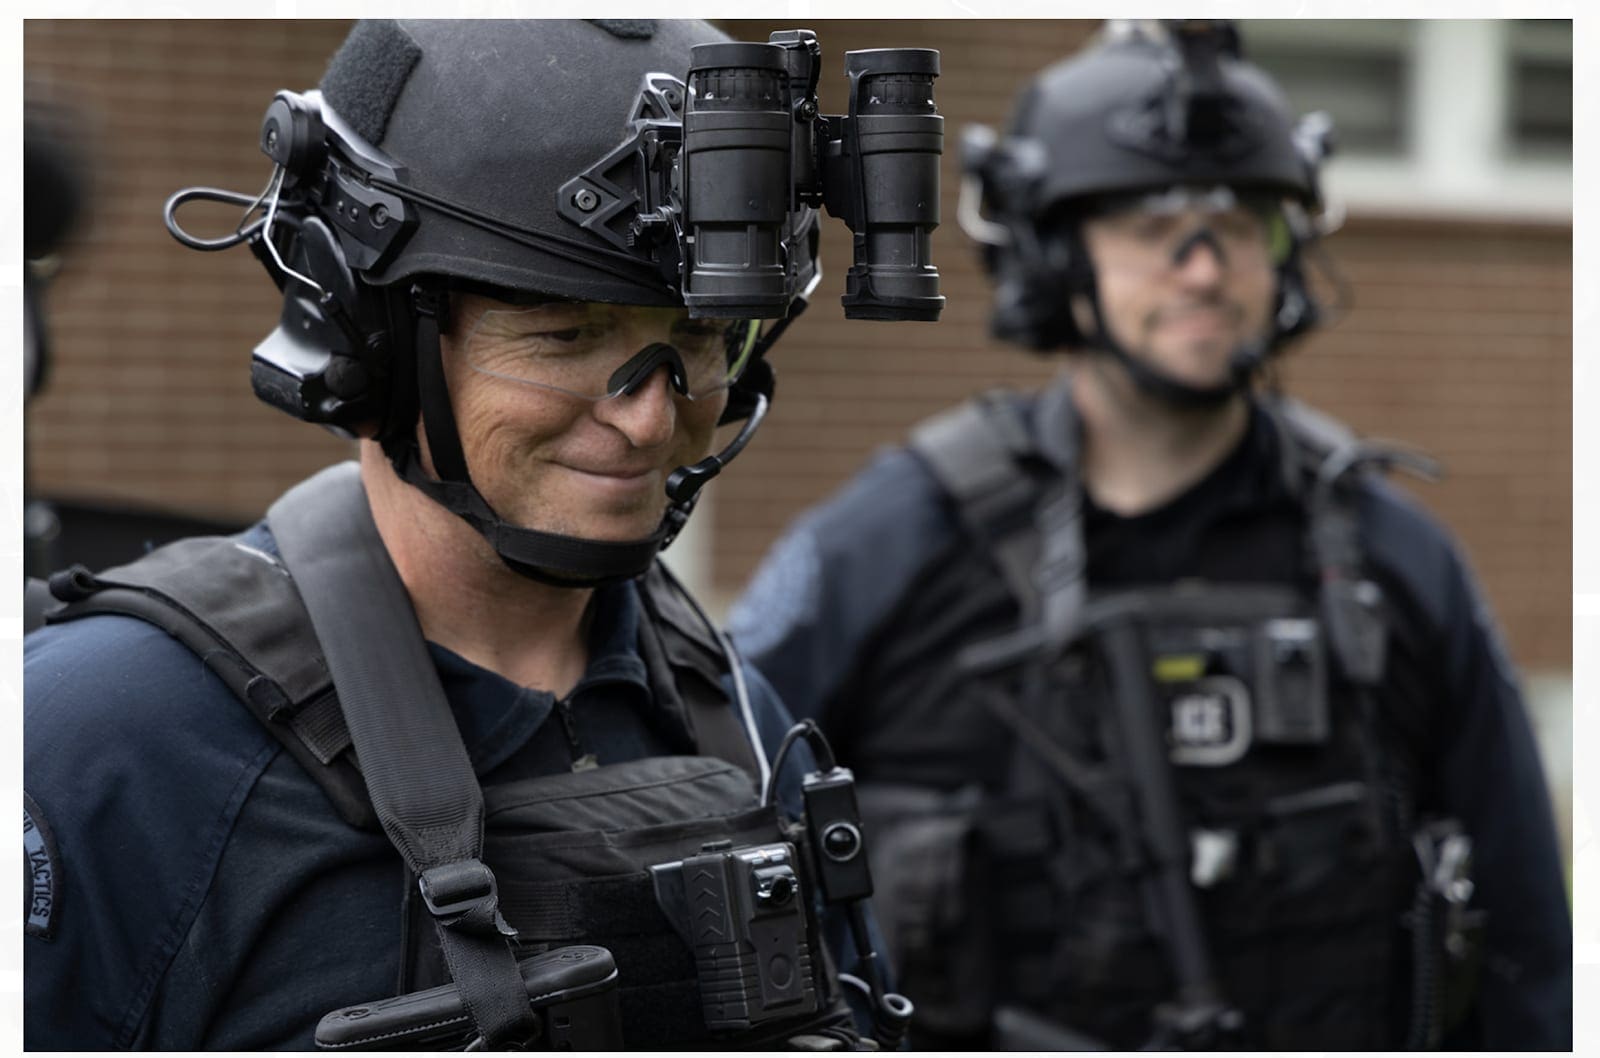 Police Smiling